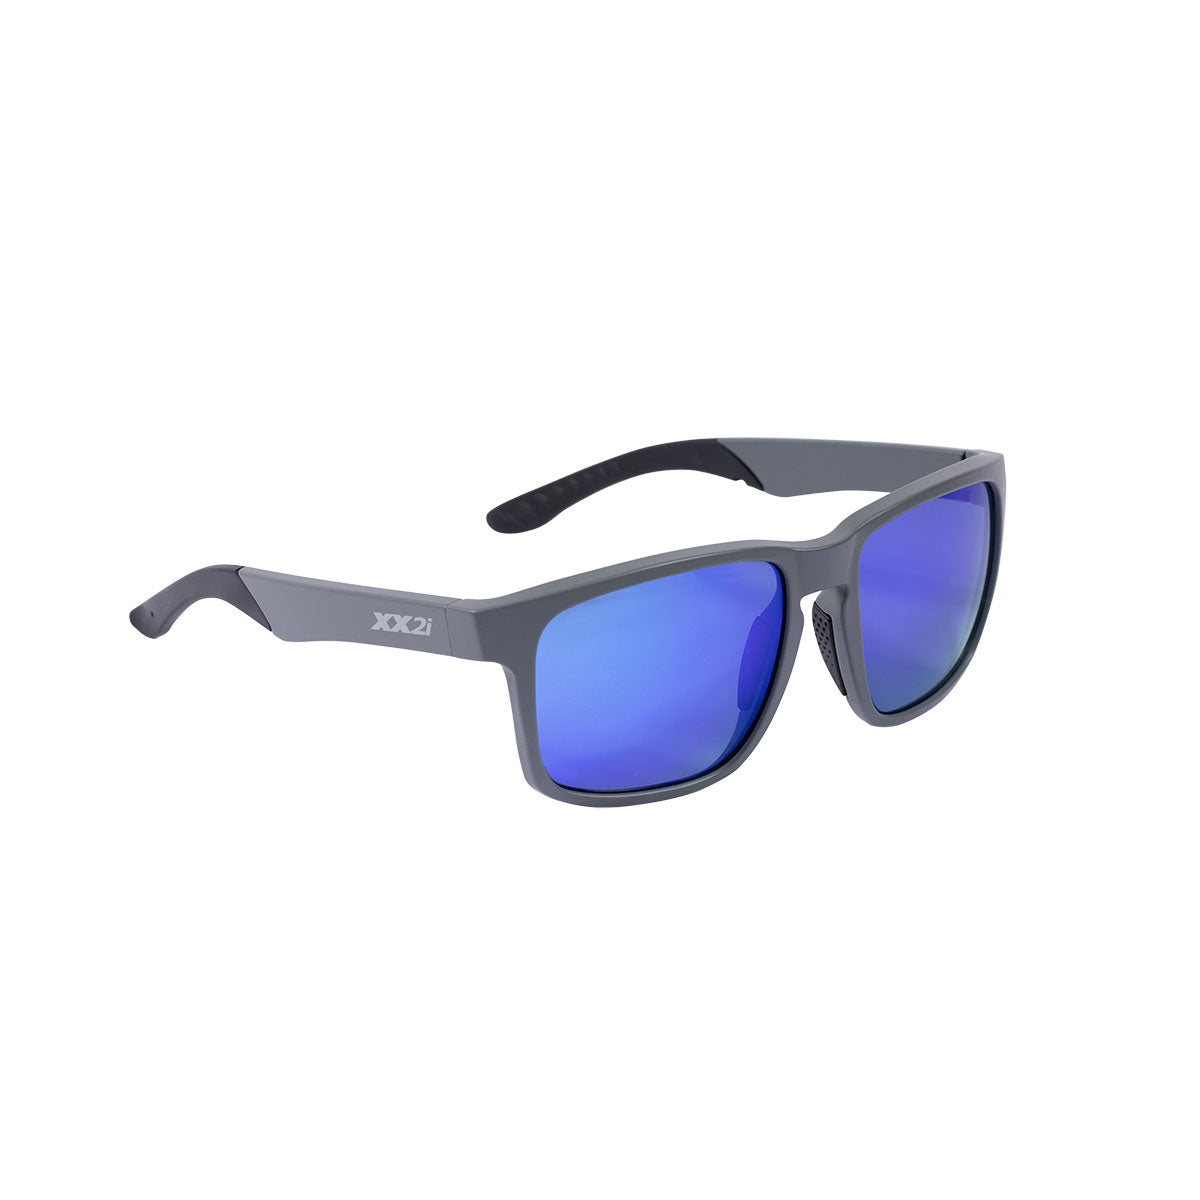 Key West R1 Lifestyle XX2i Sunglasses Optics by